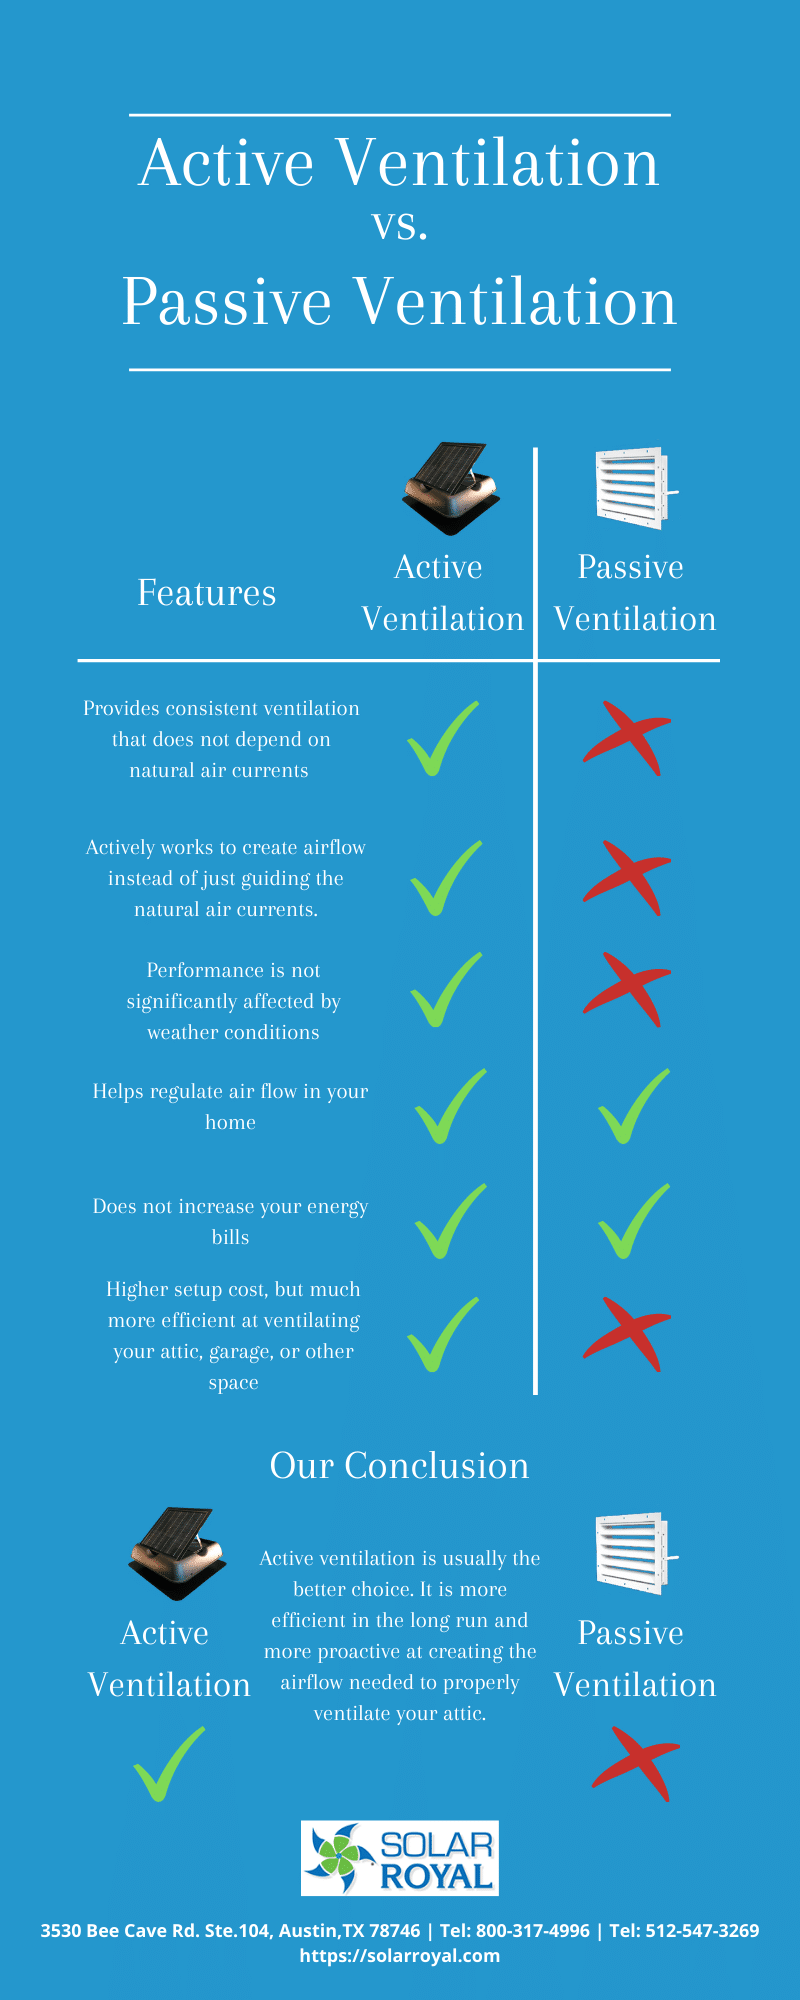 Active Ventilation vs Passive Ventilation